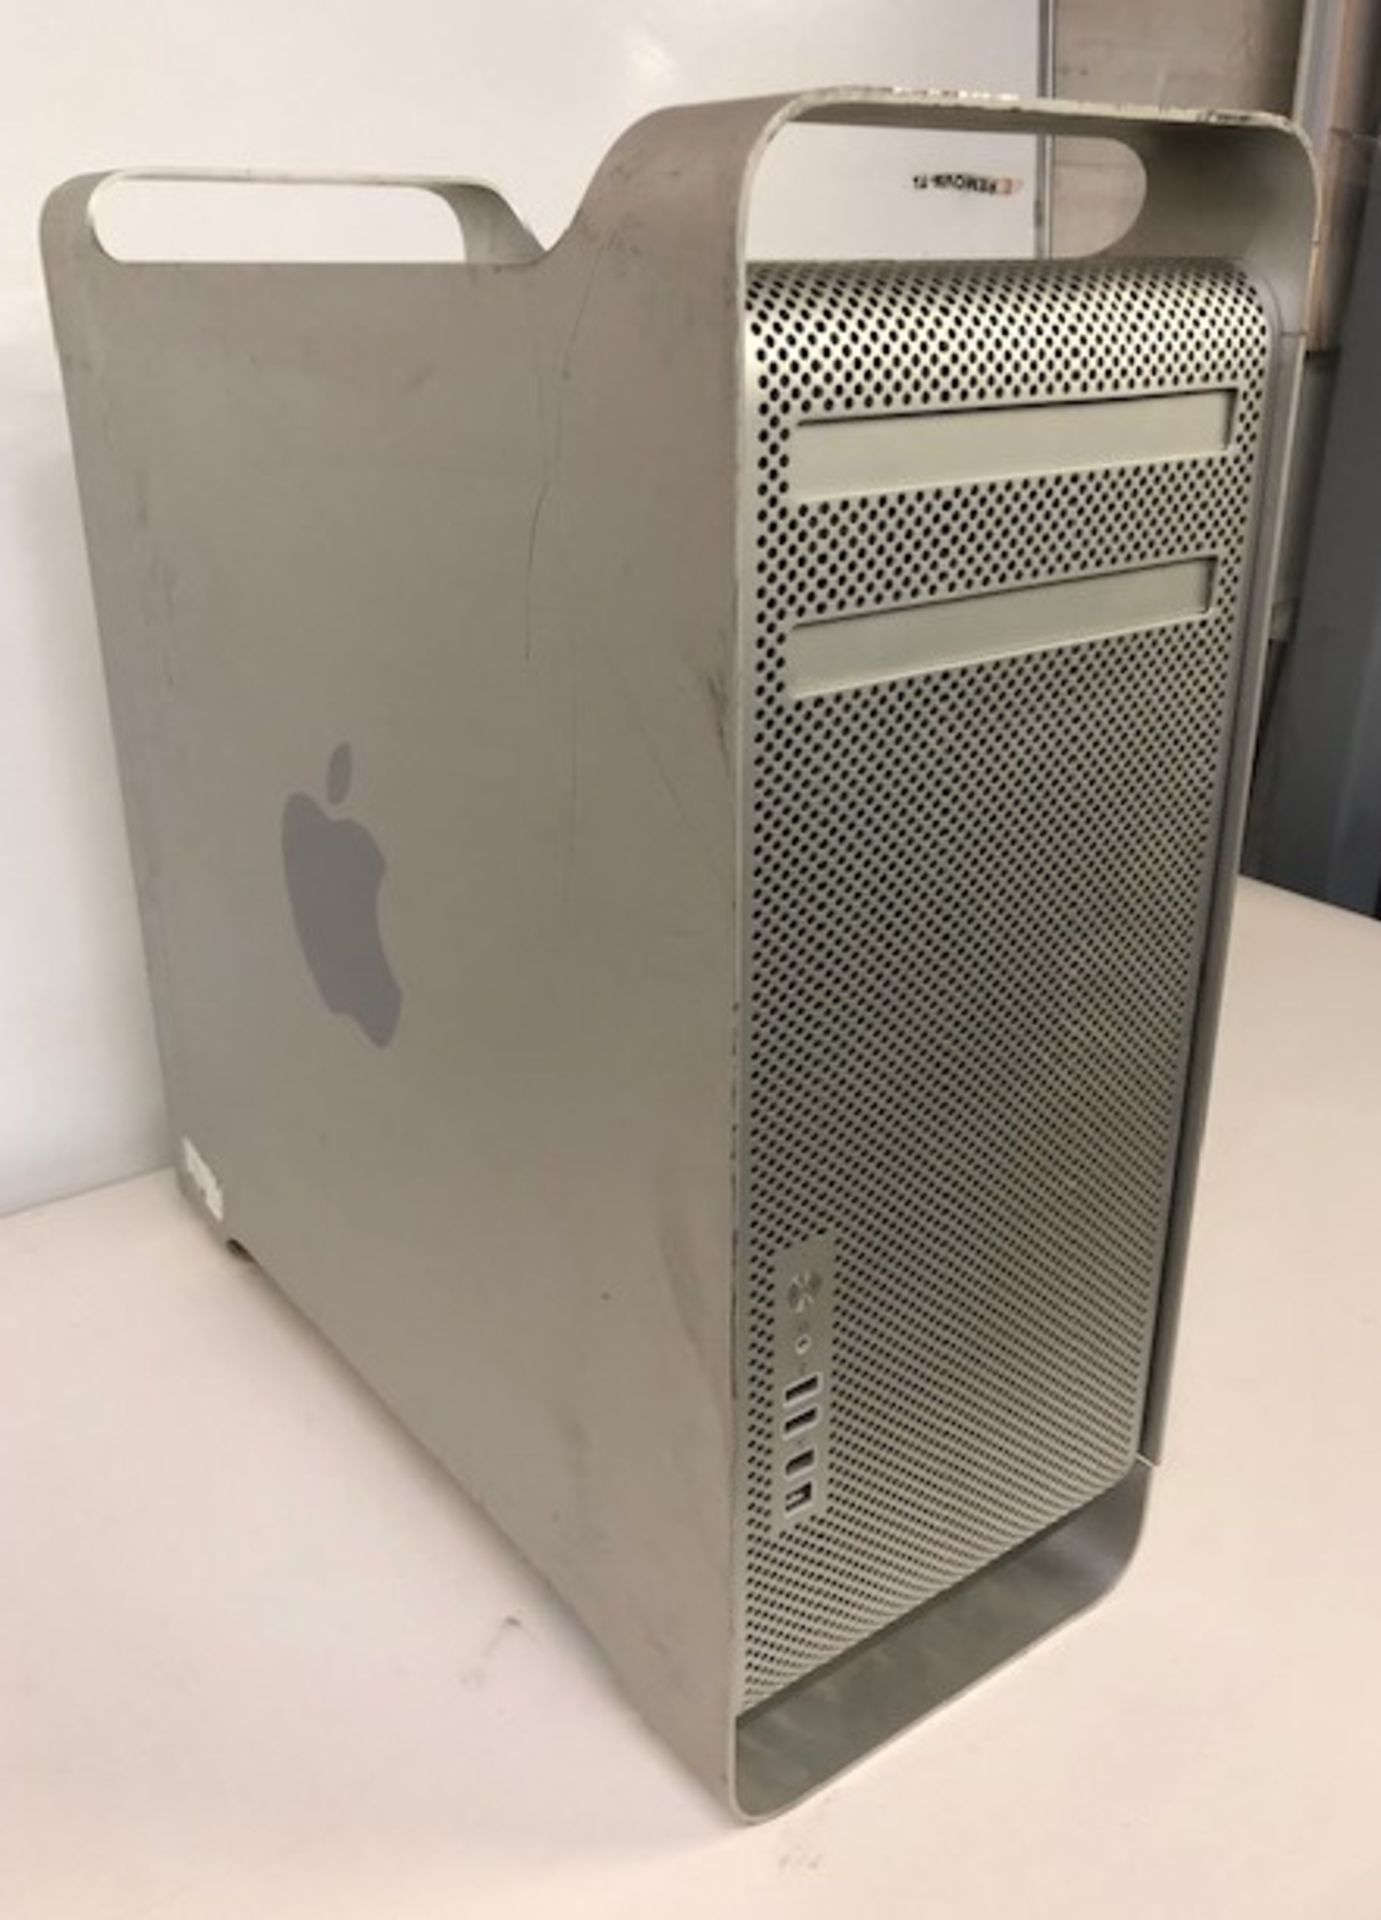 Apple A1186 Mac Pro Quad Core Desktop Computer - Image 3 of 6